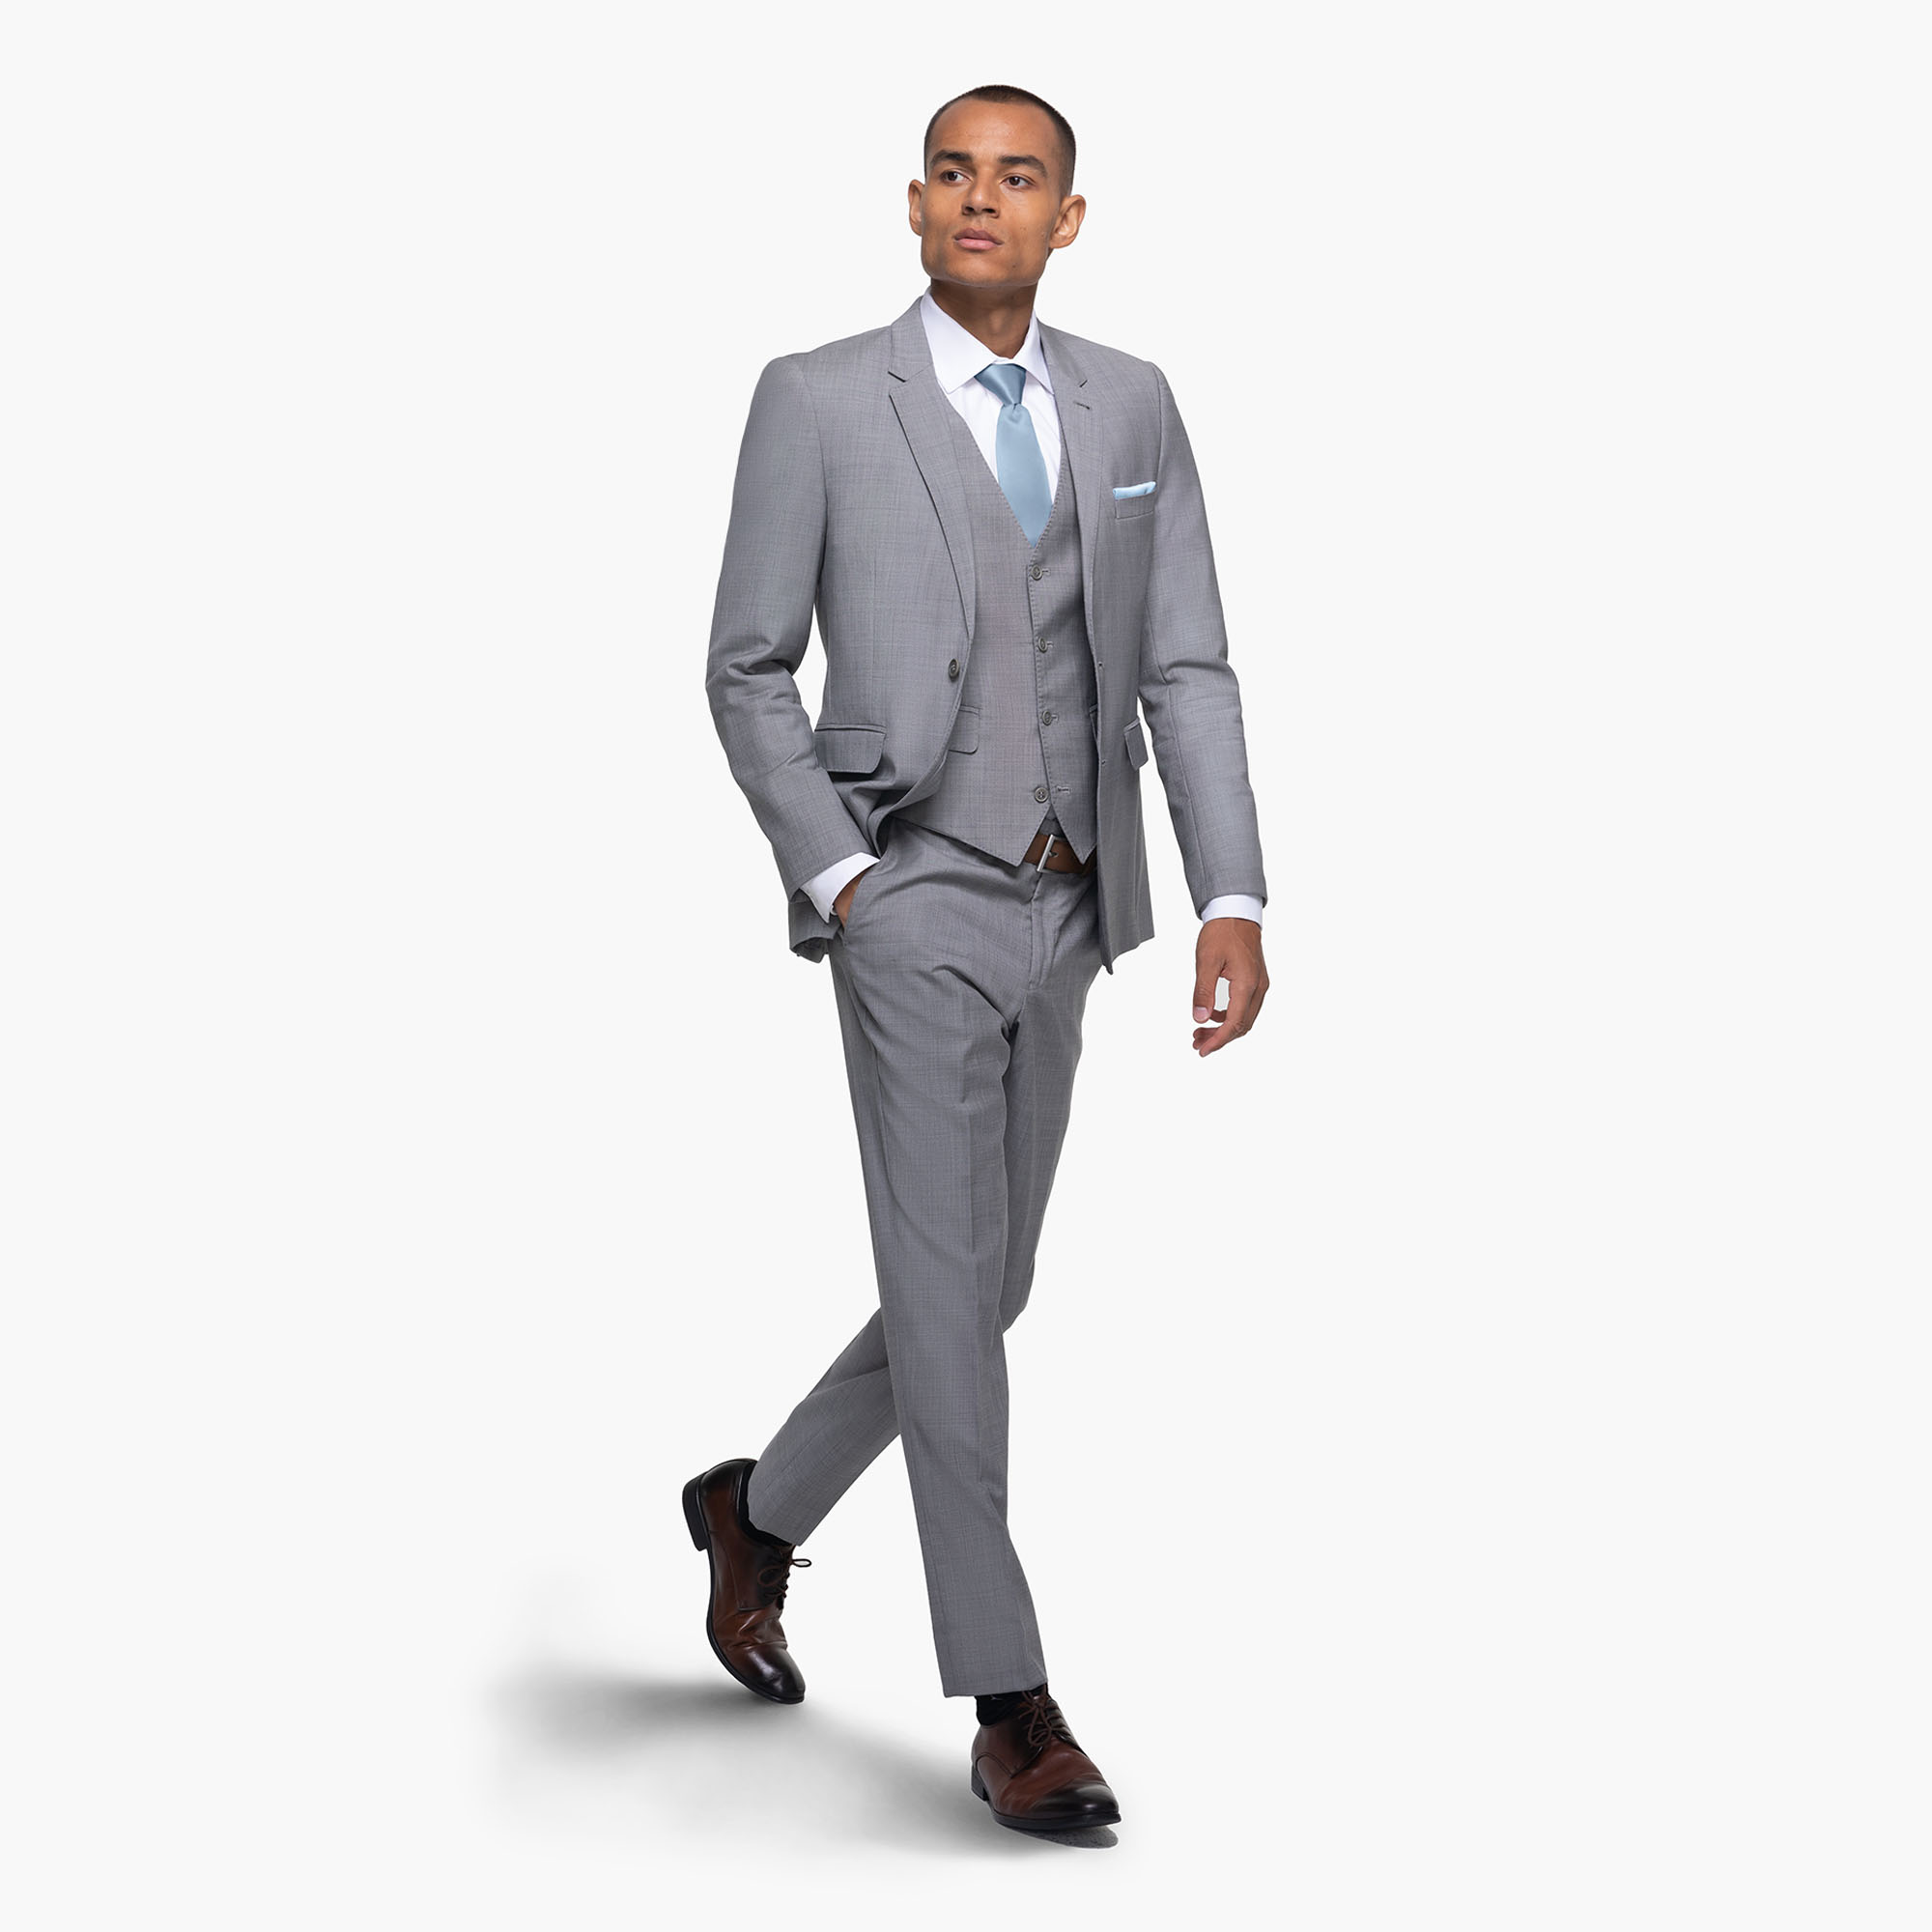 10 Grey Suit & Black Shirt Outfits for Men - Suits Expert